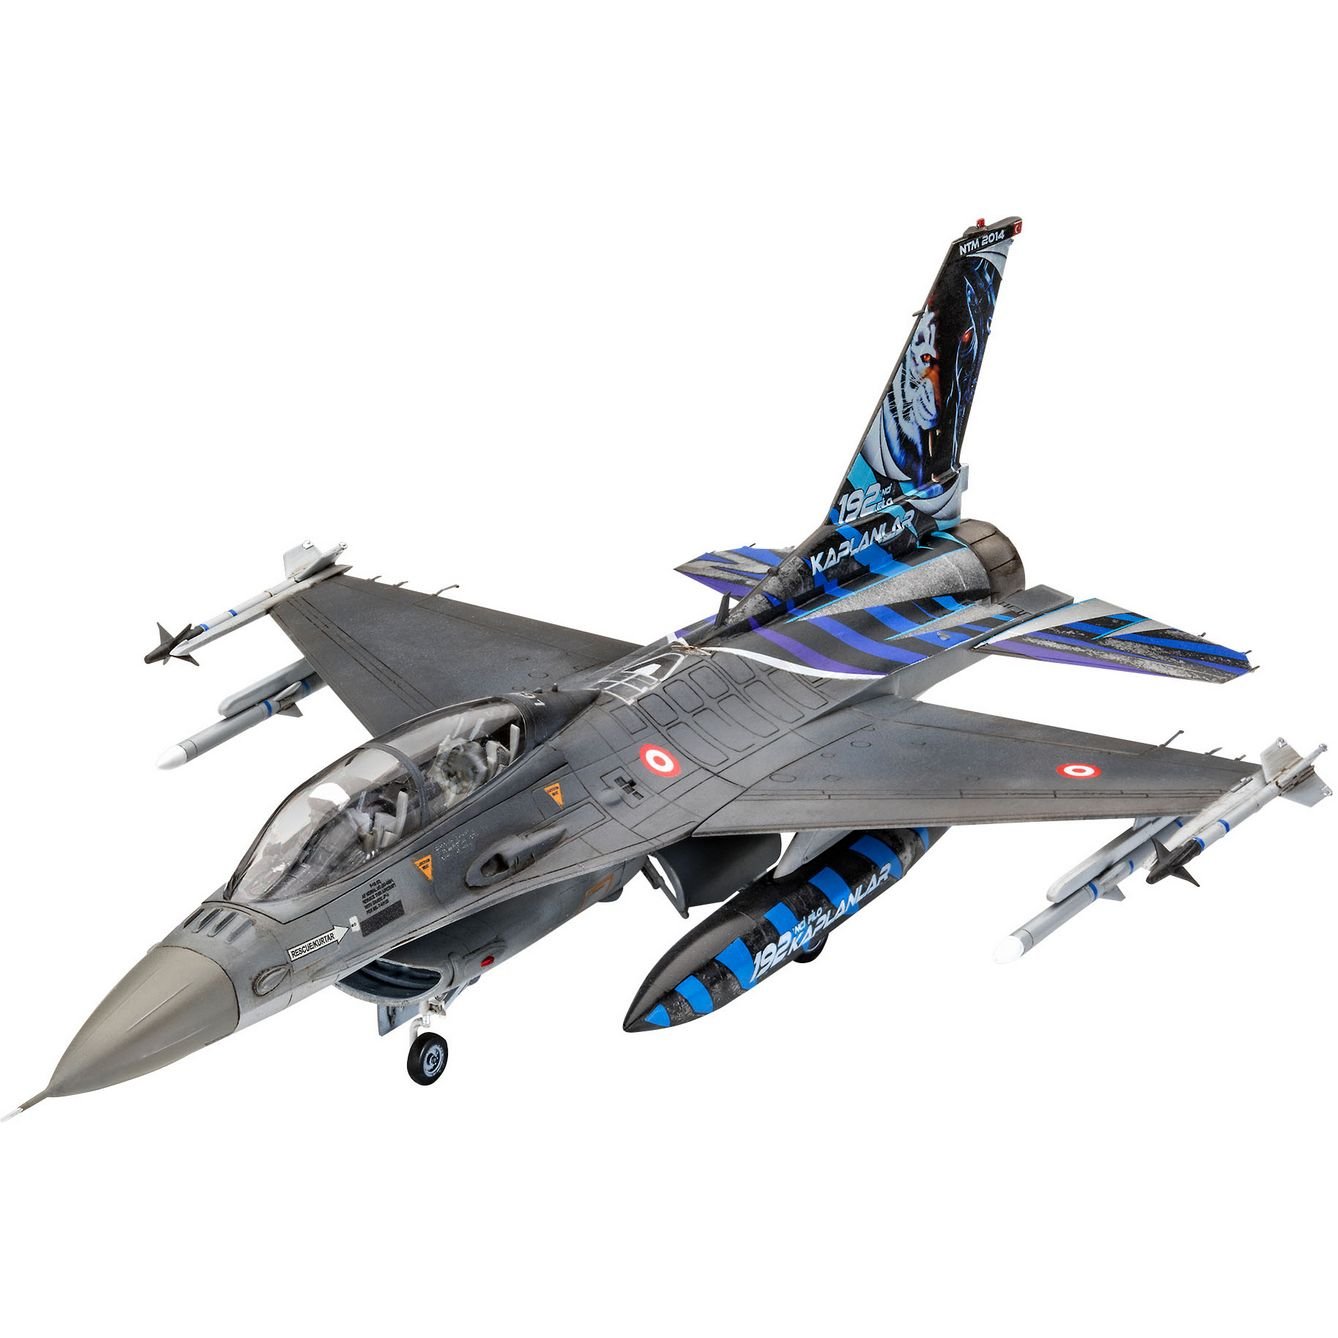 Збірна модель Revell Набір Літак F-16D Tigermeet 2014, рівень 4, масштаб 1:72, 130 деталей (RVL-63844) - фото 3